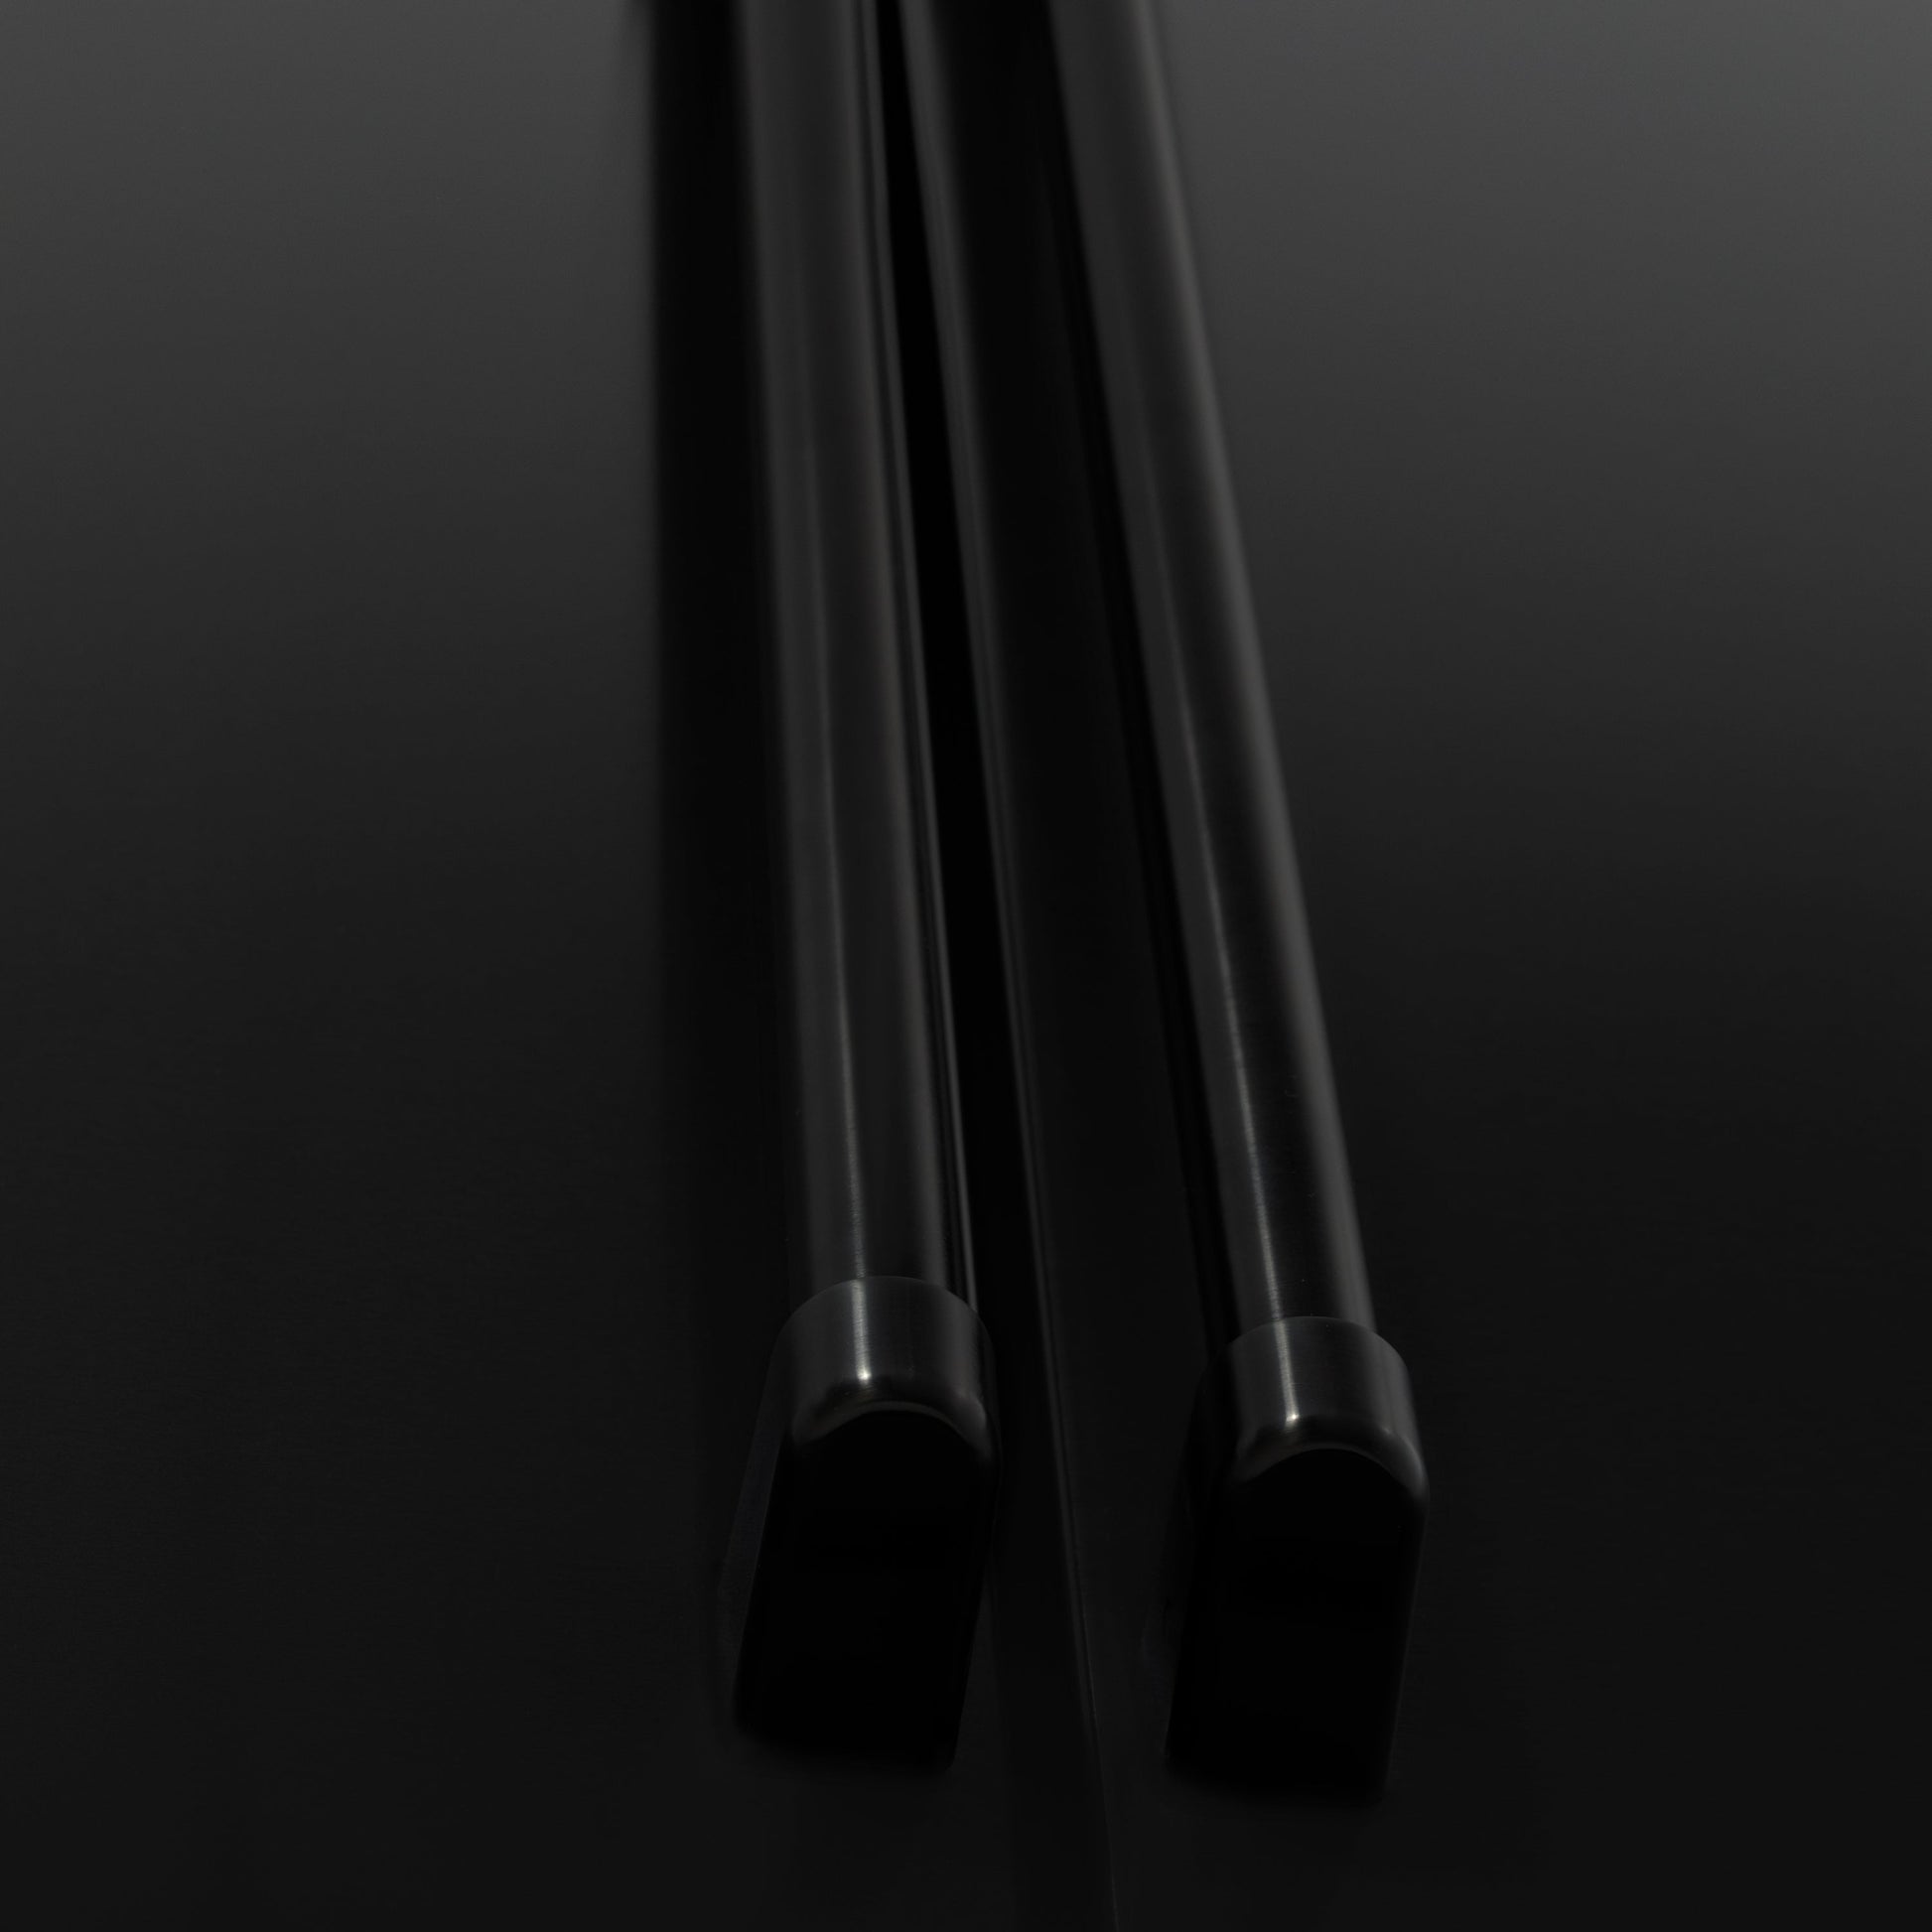 Black handles on ZLINE 36 in. French Door Refrigerator in Black Stainless Steel (RFM-36-BS)